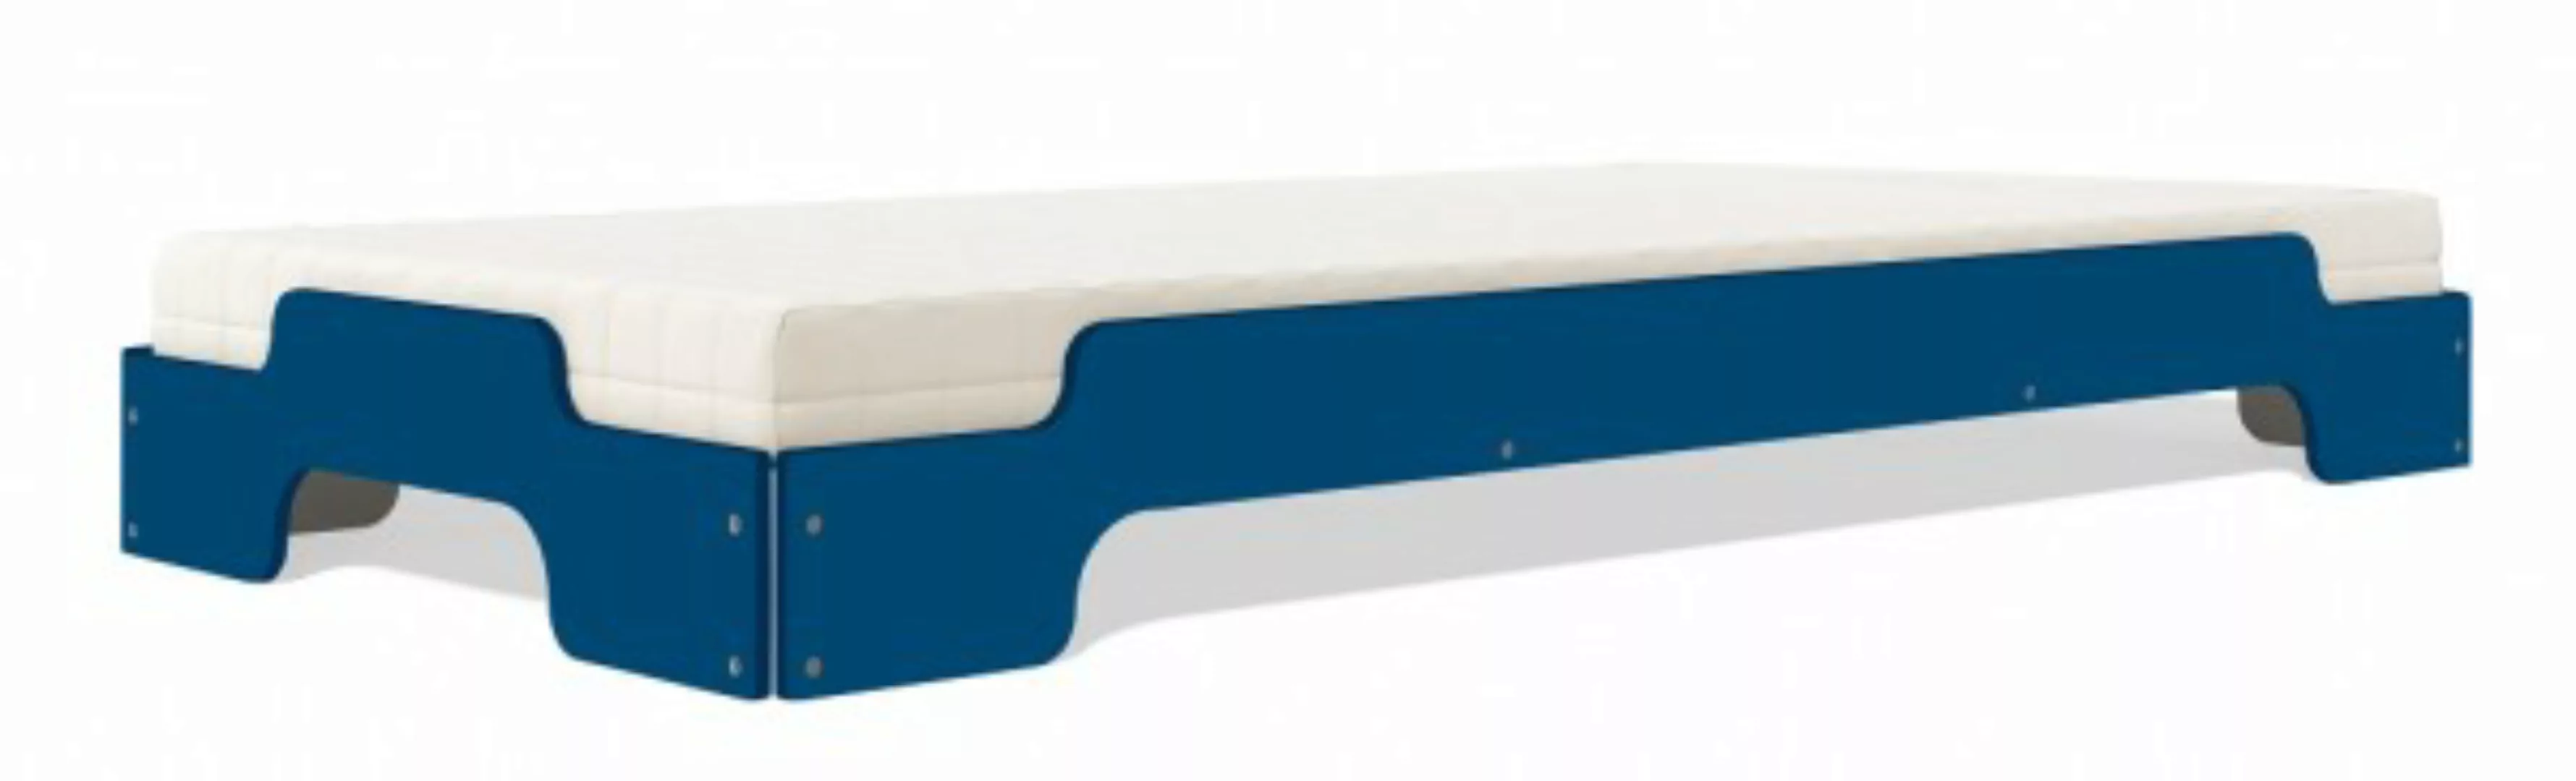 Stapelliege KLASSIK - Farbig kapitänsblau RAL 240 30 35 100 x 200 cm günstig online kaufen